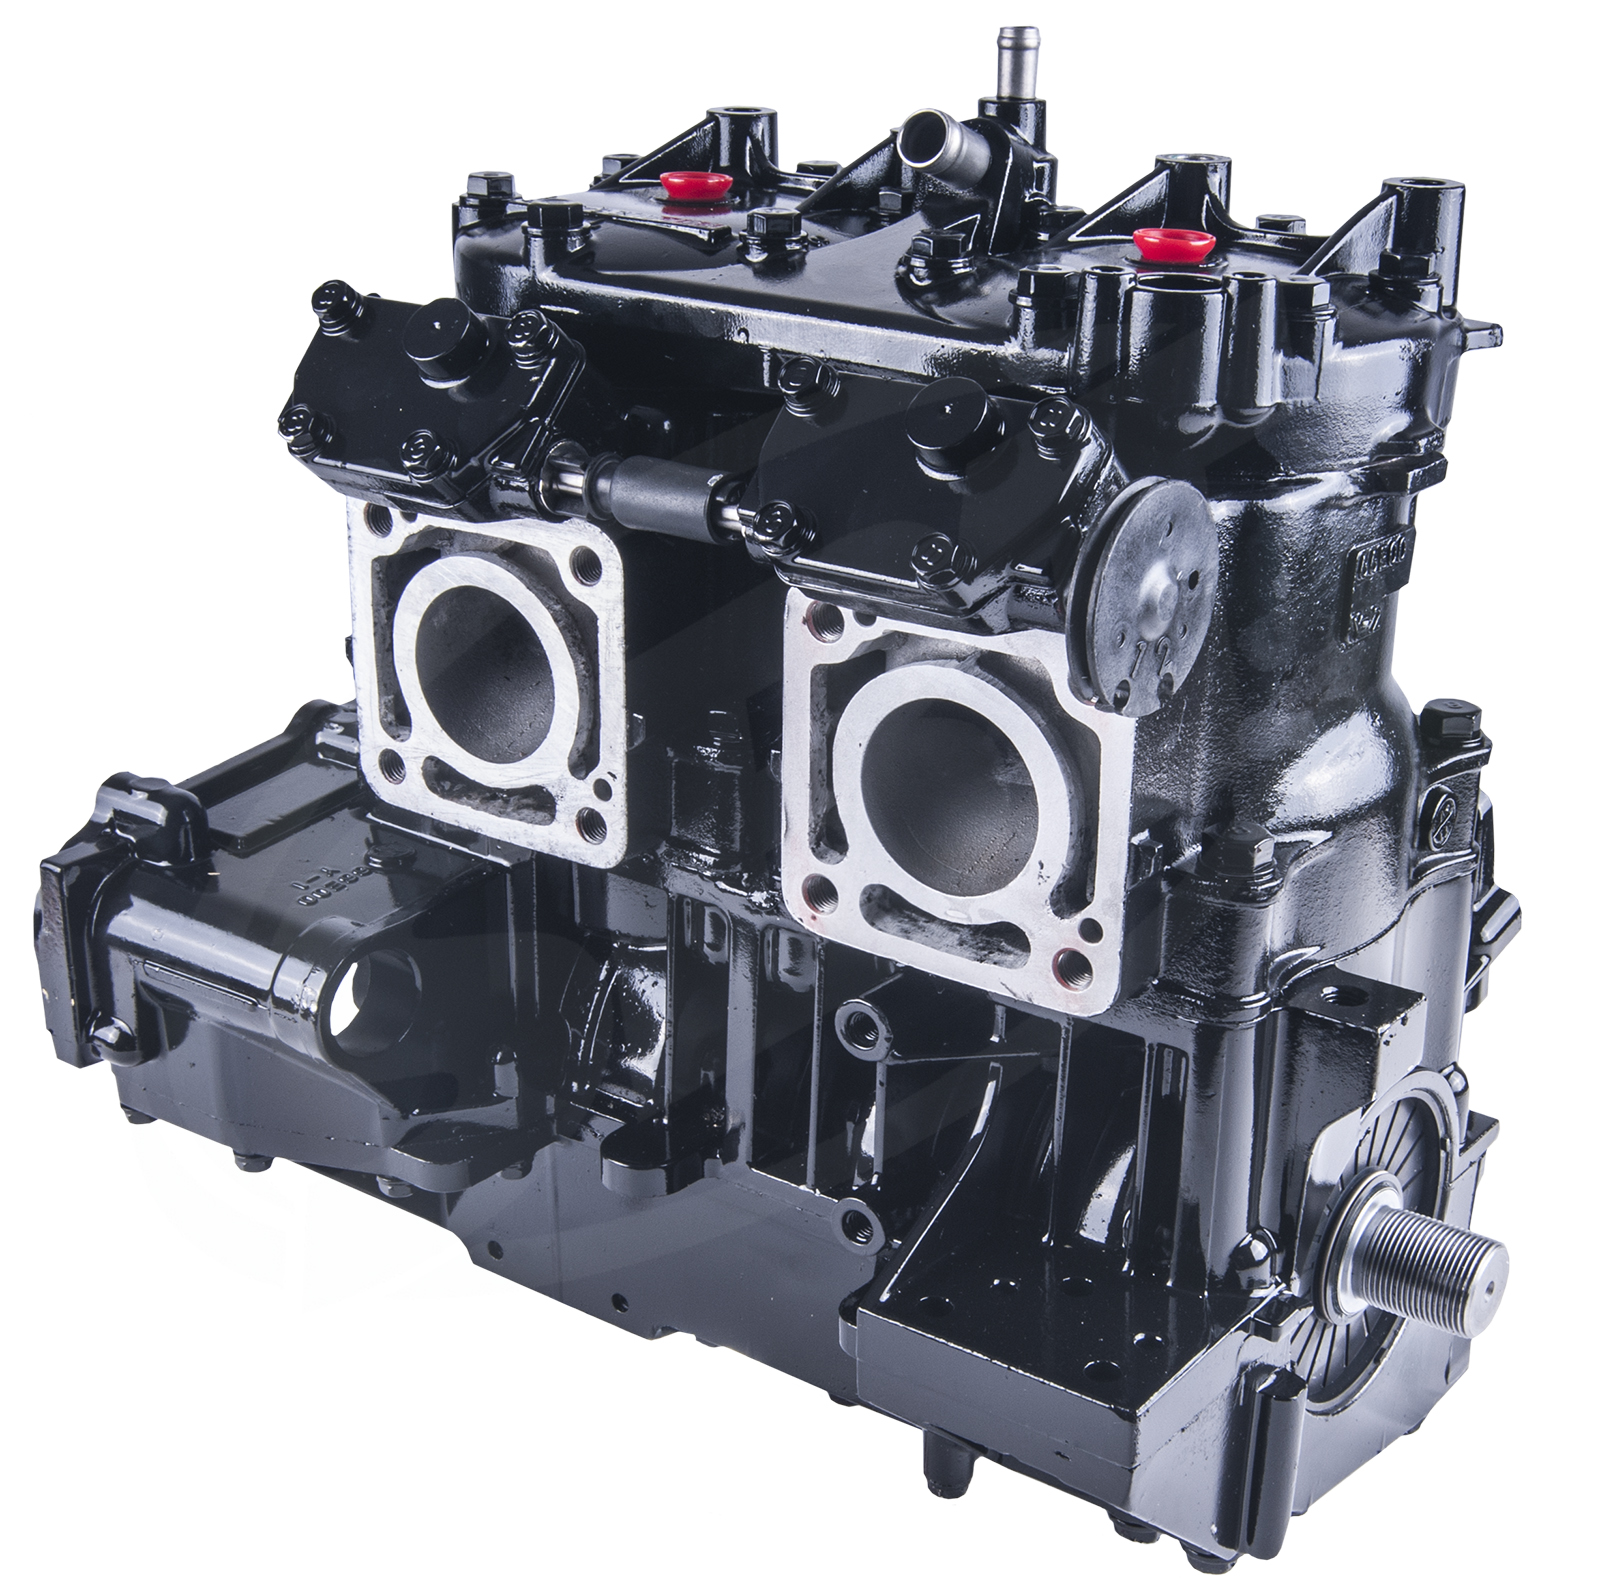 PWC Universal Flywheel Puller for 2 Stroke Engines Yamaha GP1200 XL700 GP800 